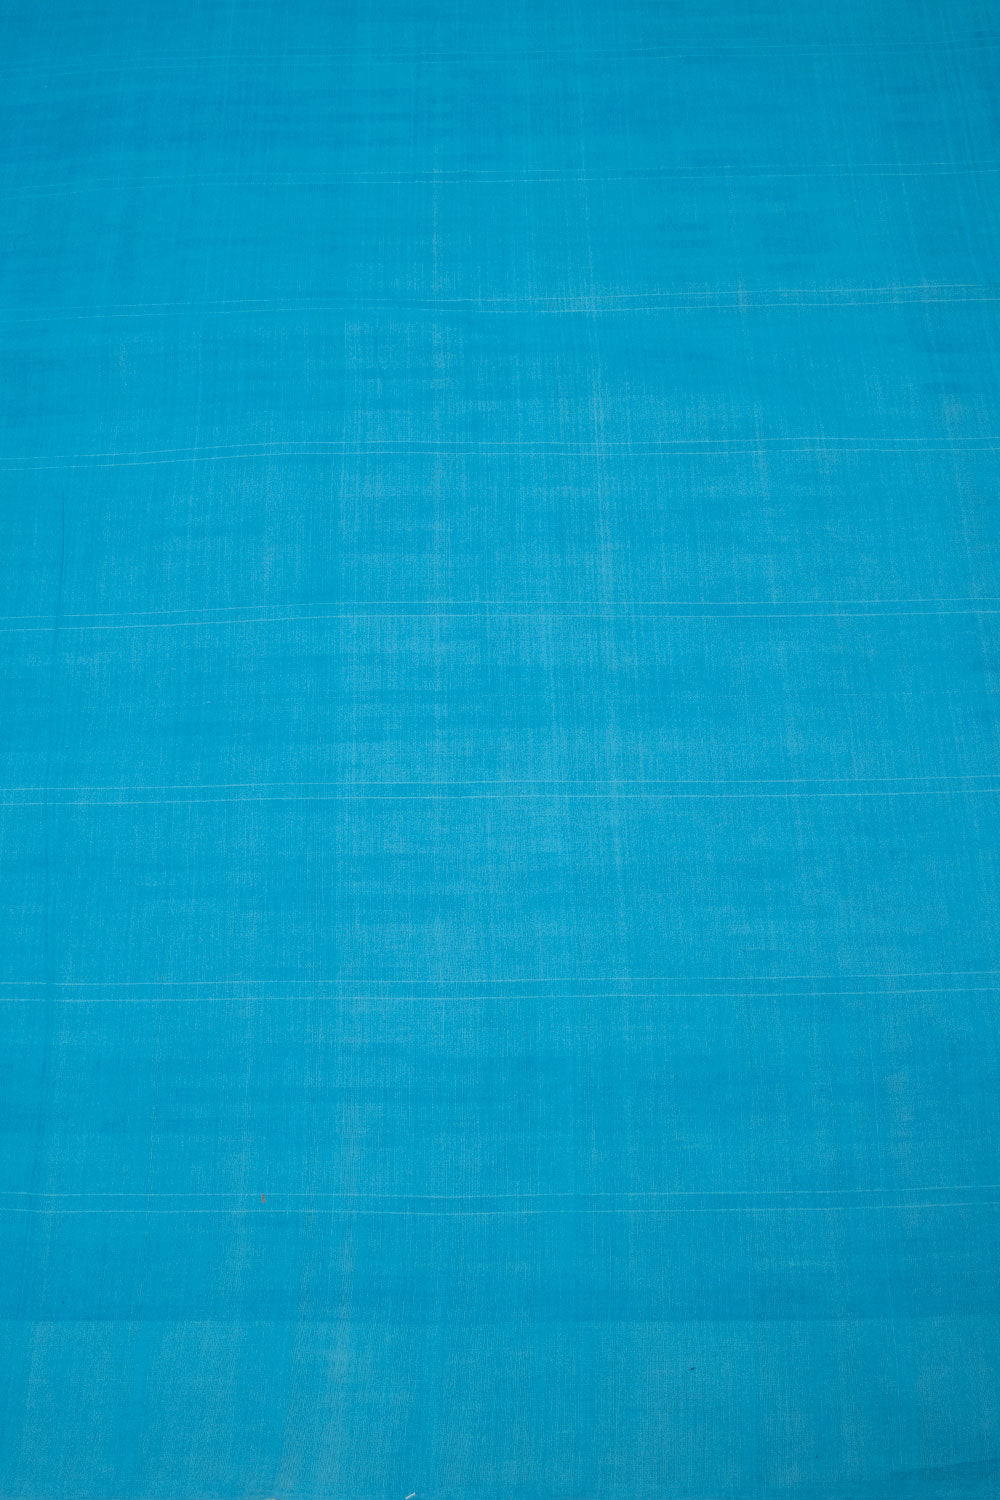 Black & Blue Handloom Telia Rumal Ikat Cotton Saree 10064463